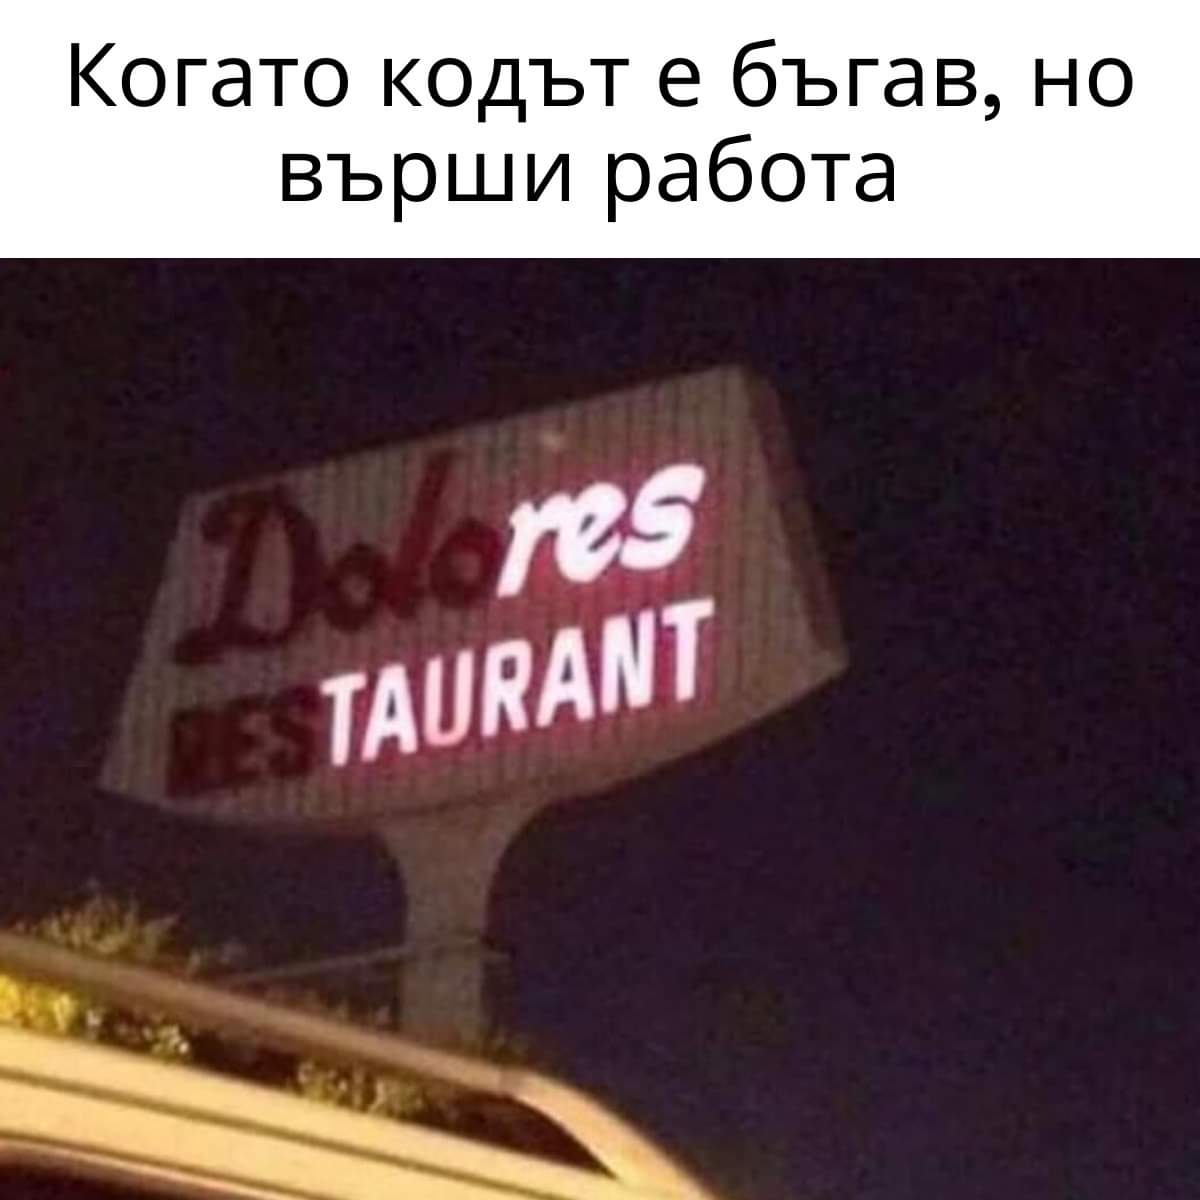 dolores_restaurant.jpg